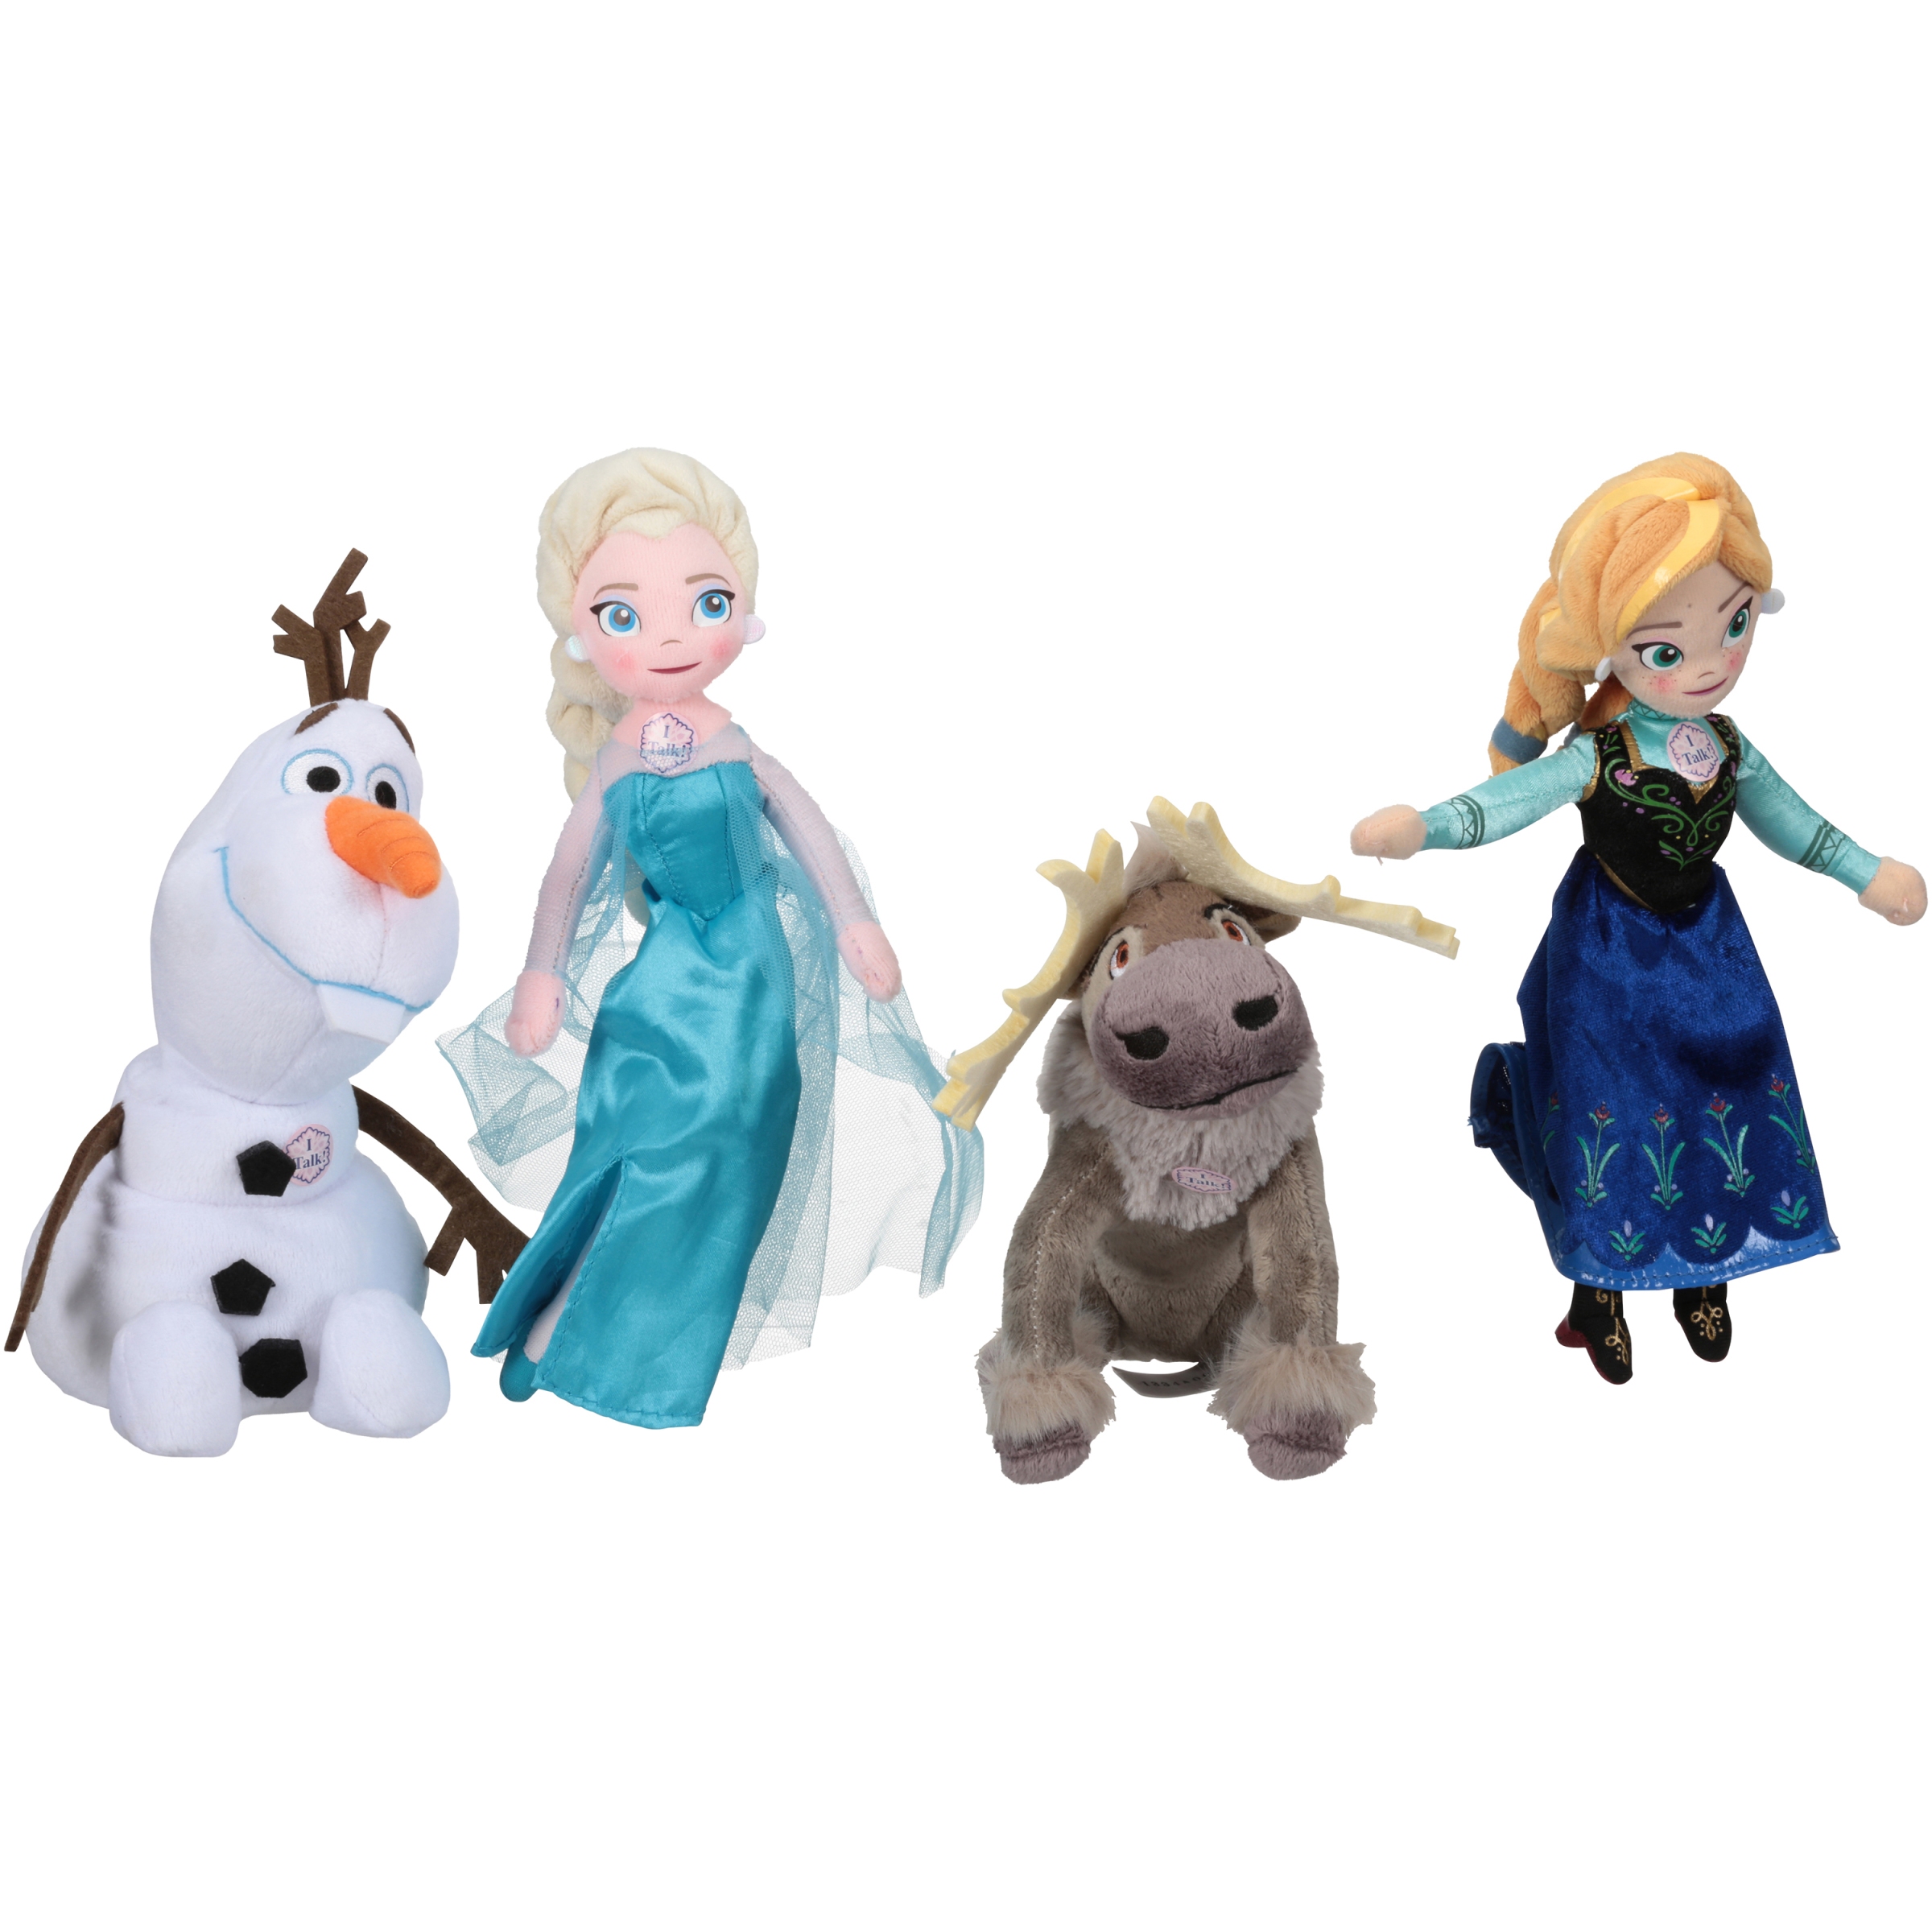 Disney Frozen Talking Plush Bean Elsa/Anna/Olaf/Sven Dolls 4 ct Box - image 1 of 2